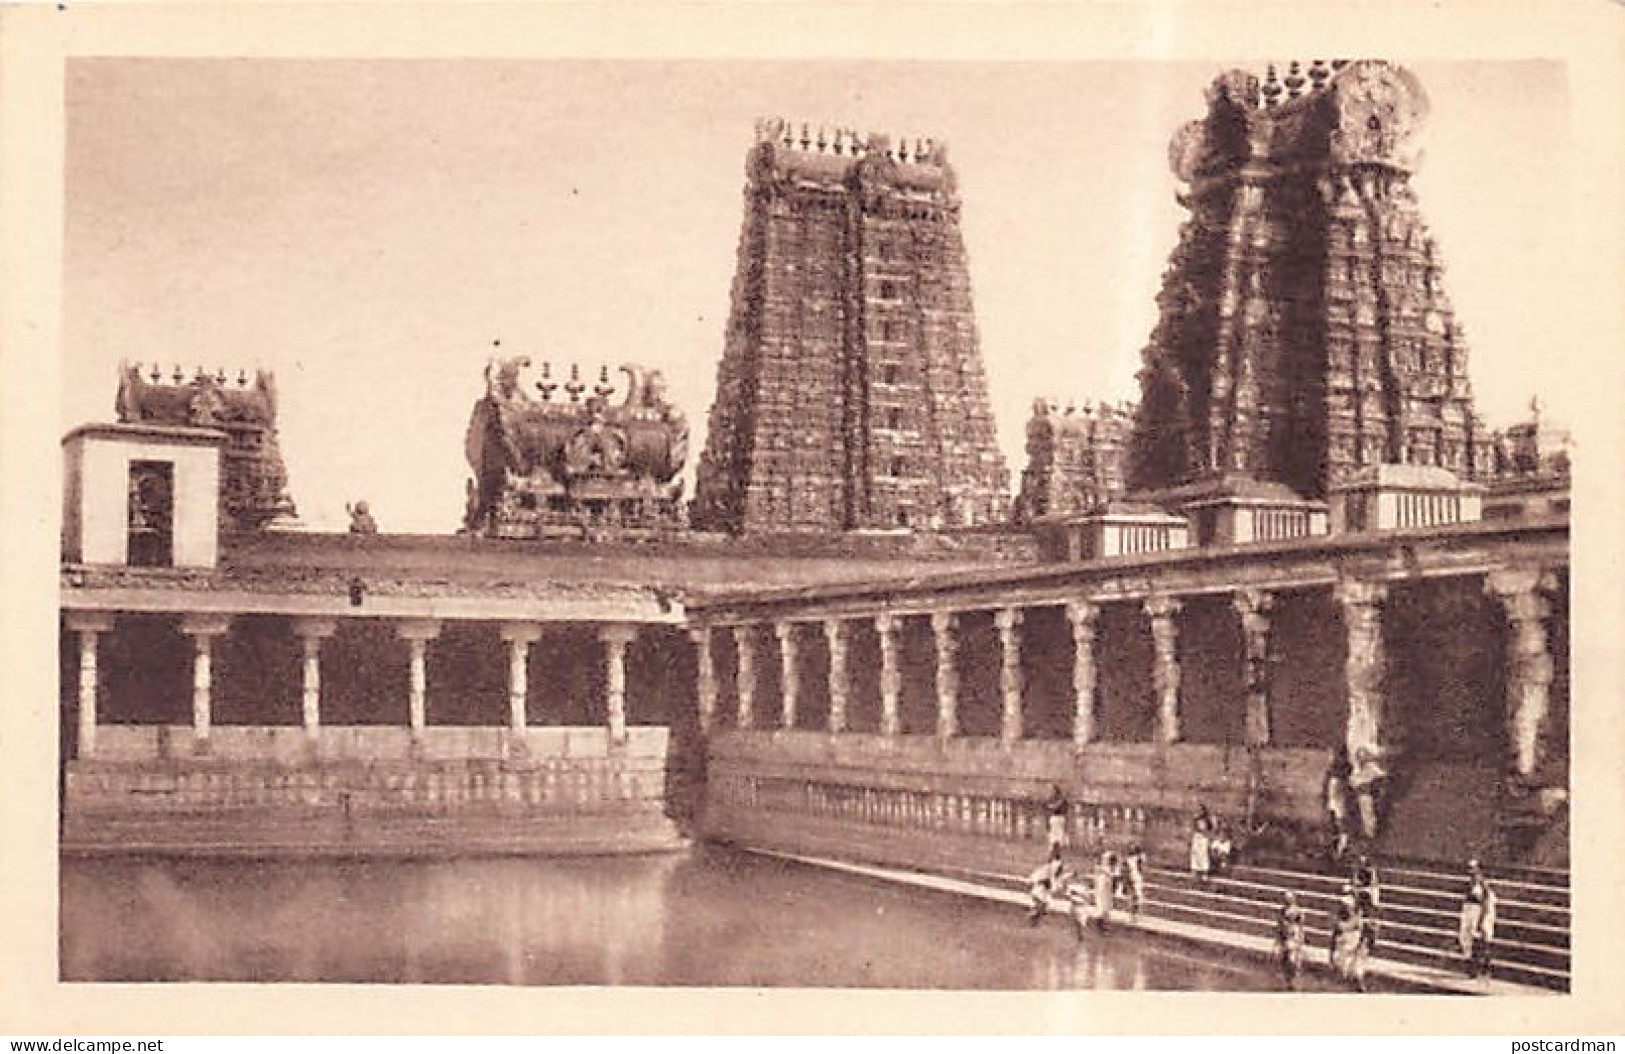 India - MADURAI Tamil Nadu - Meenakshi Temple - Publ. Oeuvre De Propagation De La Foi Serie II N. 10 - Inde